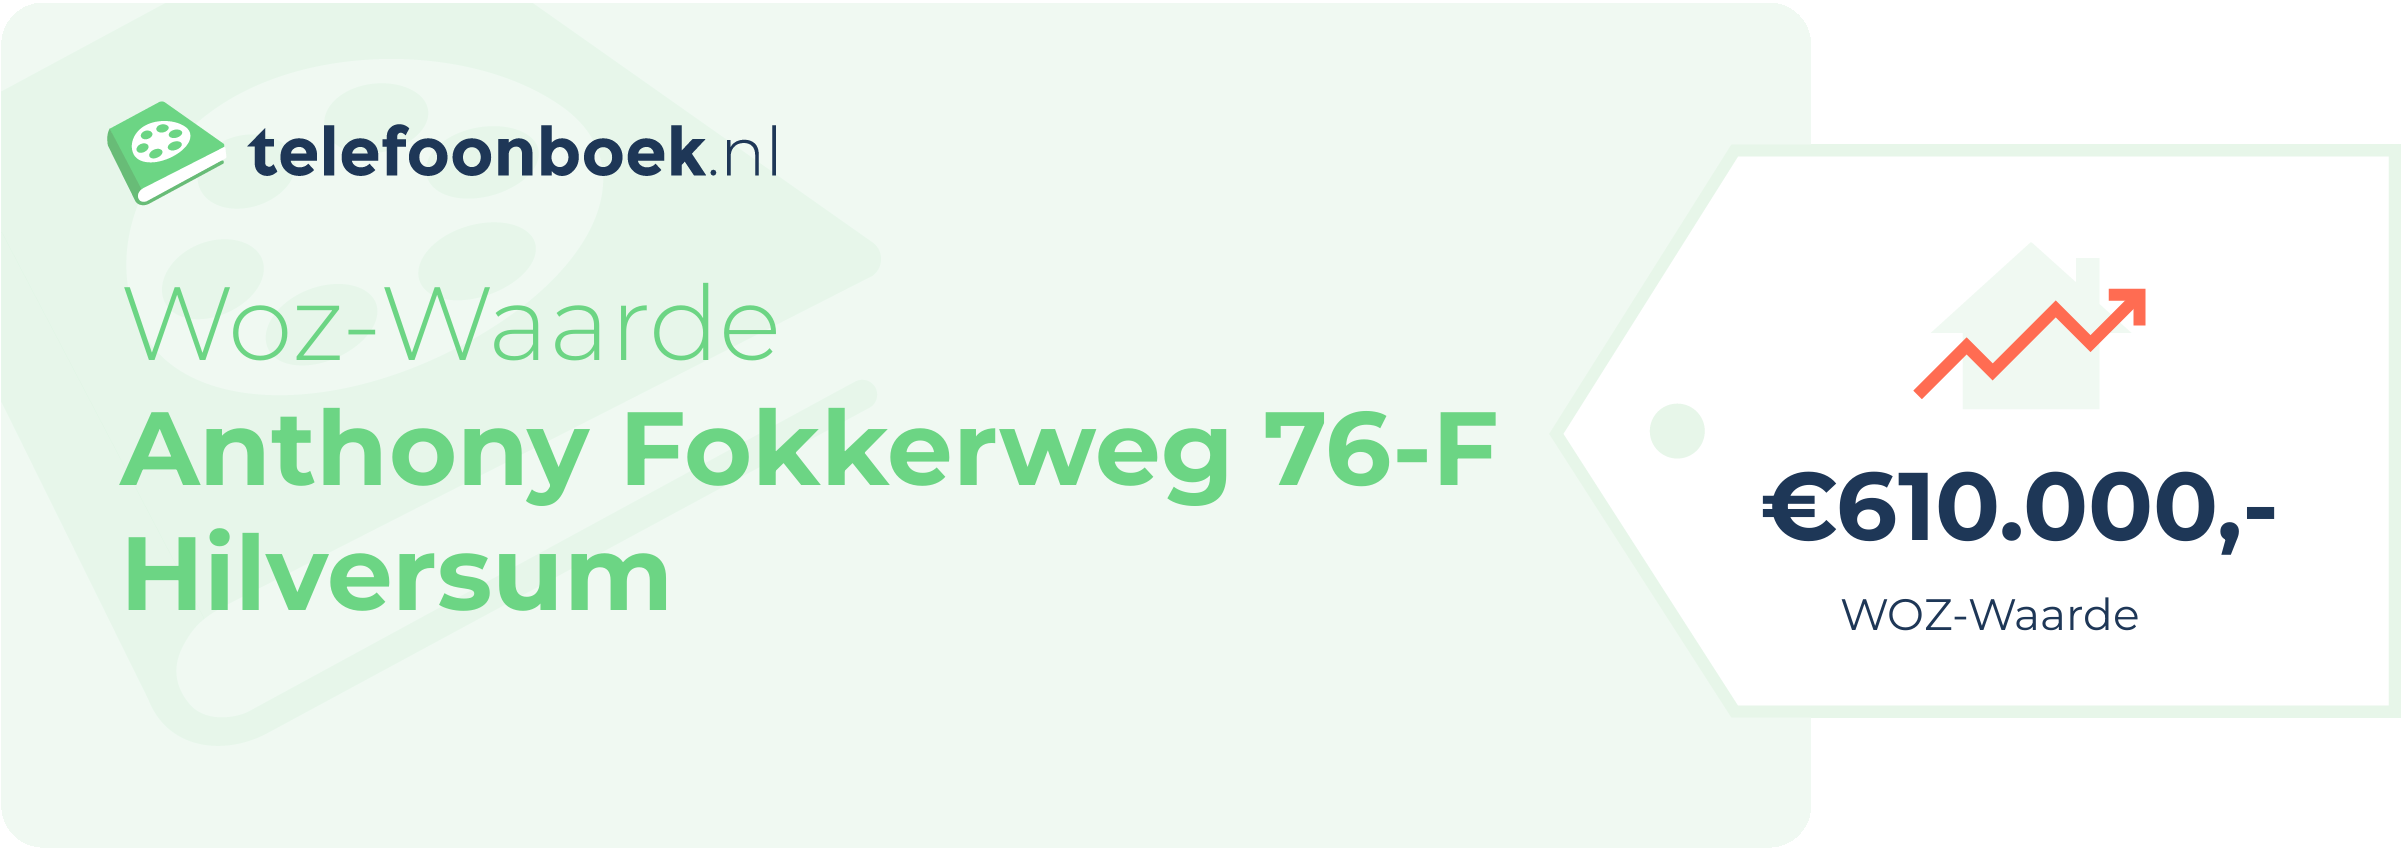 WOZ-waarde Anthony Fokkerweg 76-F Hilversum